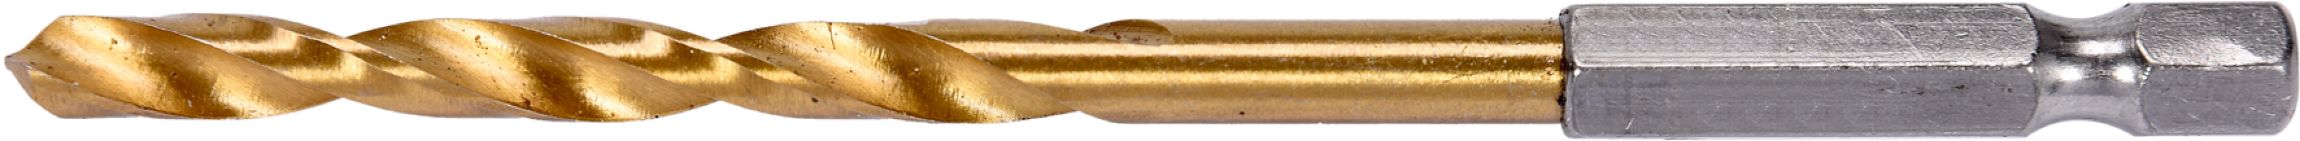 Vrtk do kovu HSS-titan 7,0mm se estihranou stopkou 1/4" Yato YT-44765